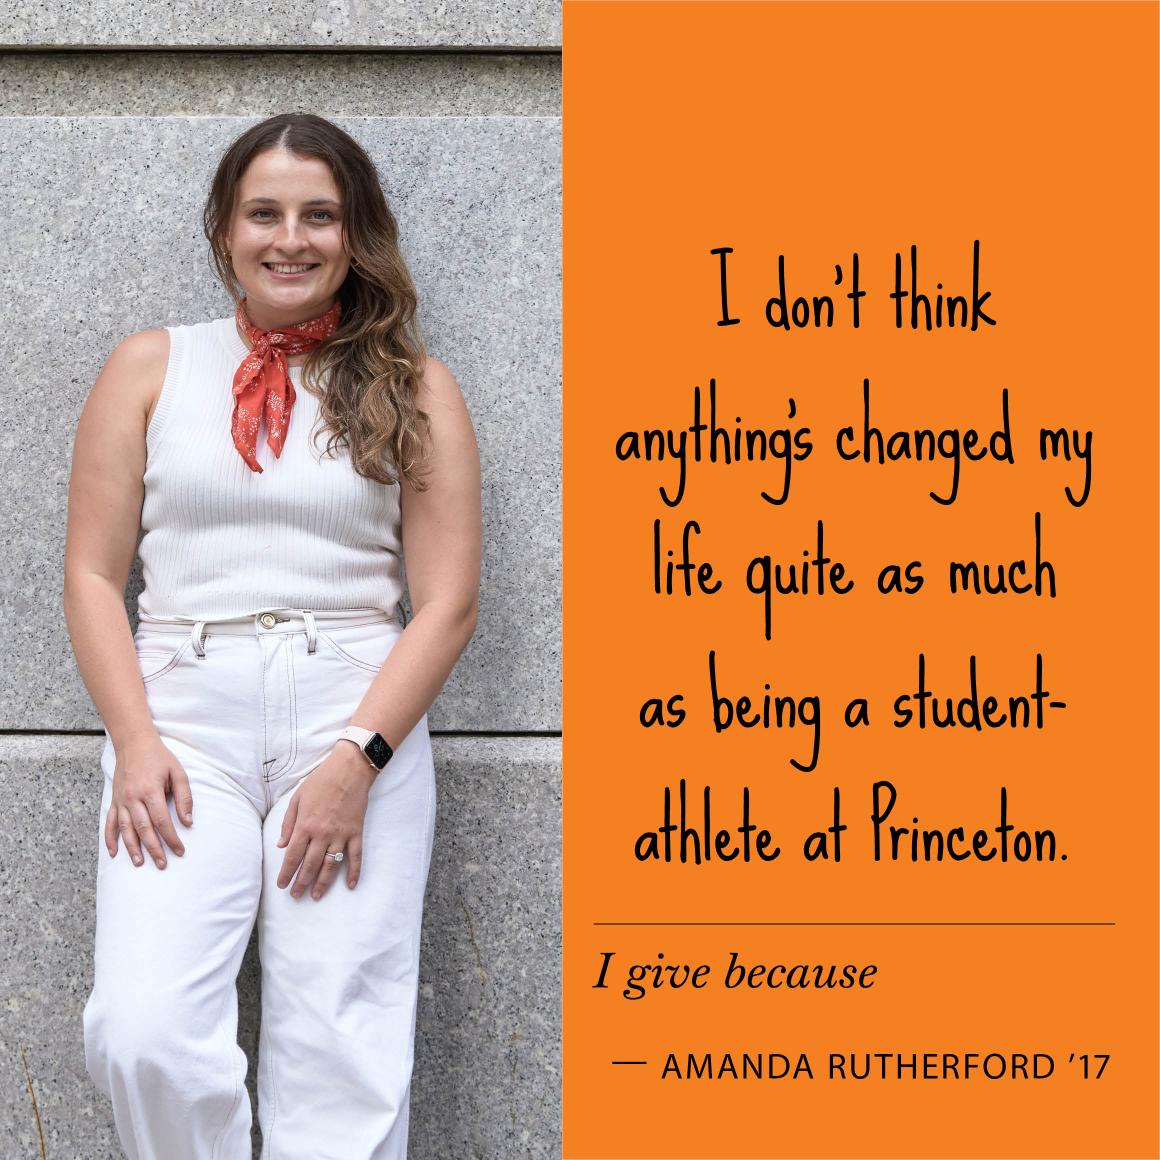 Amanda Rutherford '17